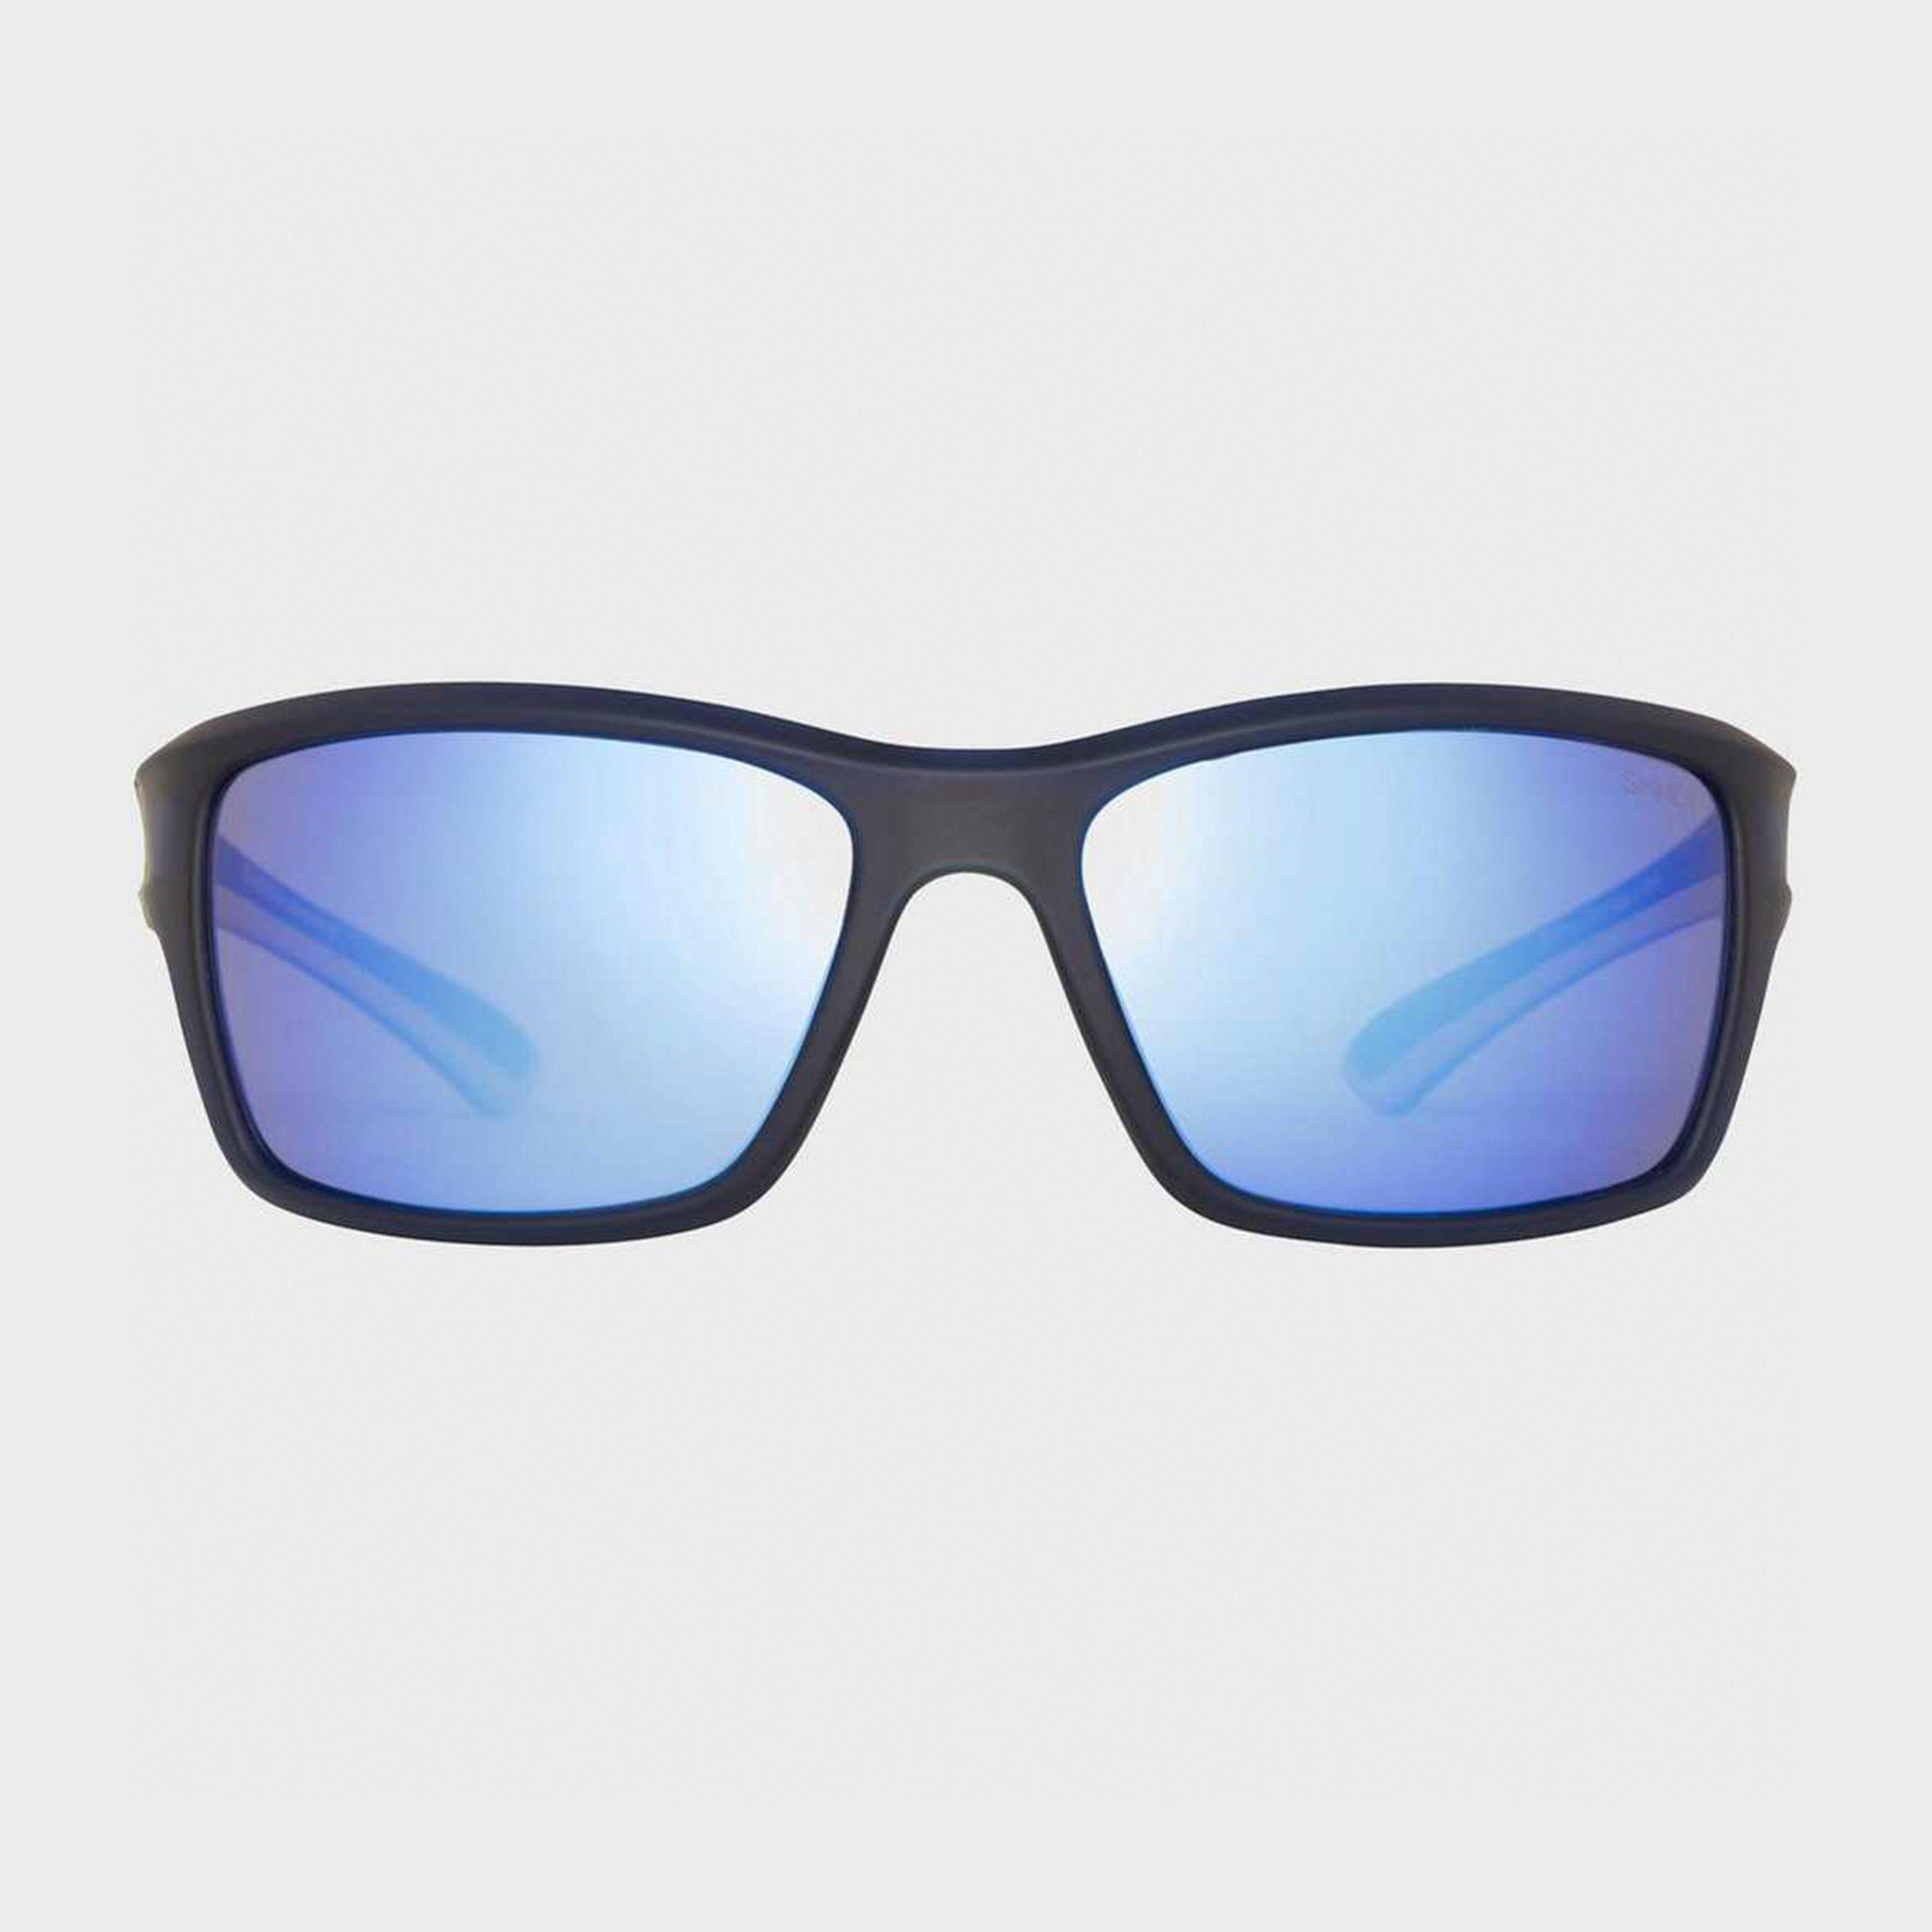 Sinner Cayo Sunglasses - Blue/revo]  Blue/revo]